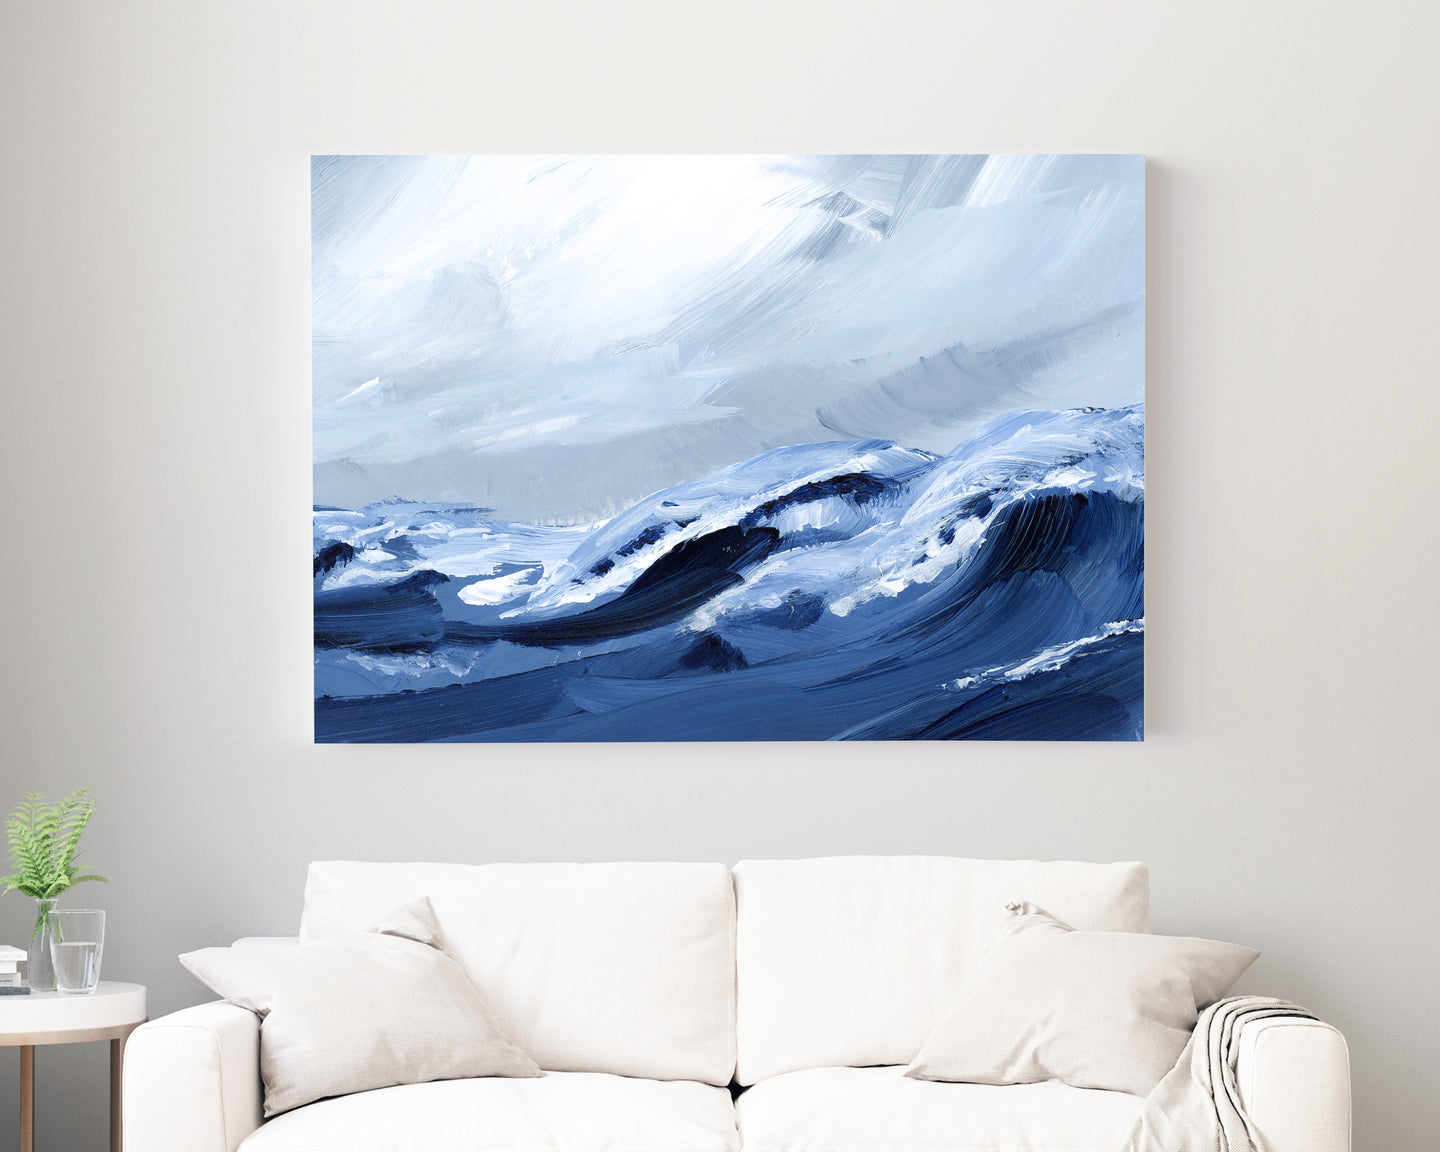 Big Sea, Waves Crashing on the Atlantic on Canvas Wrap